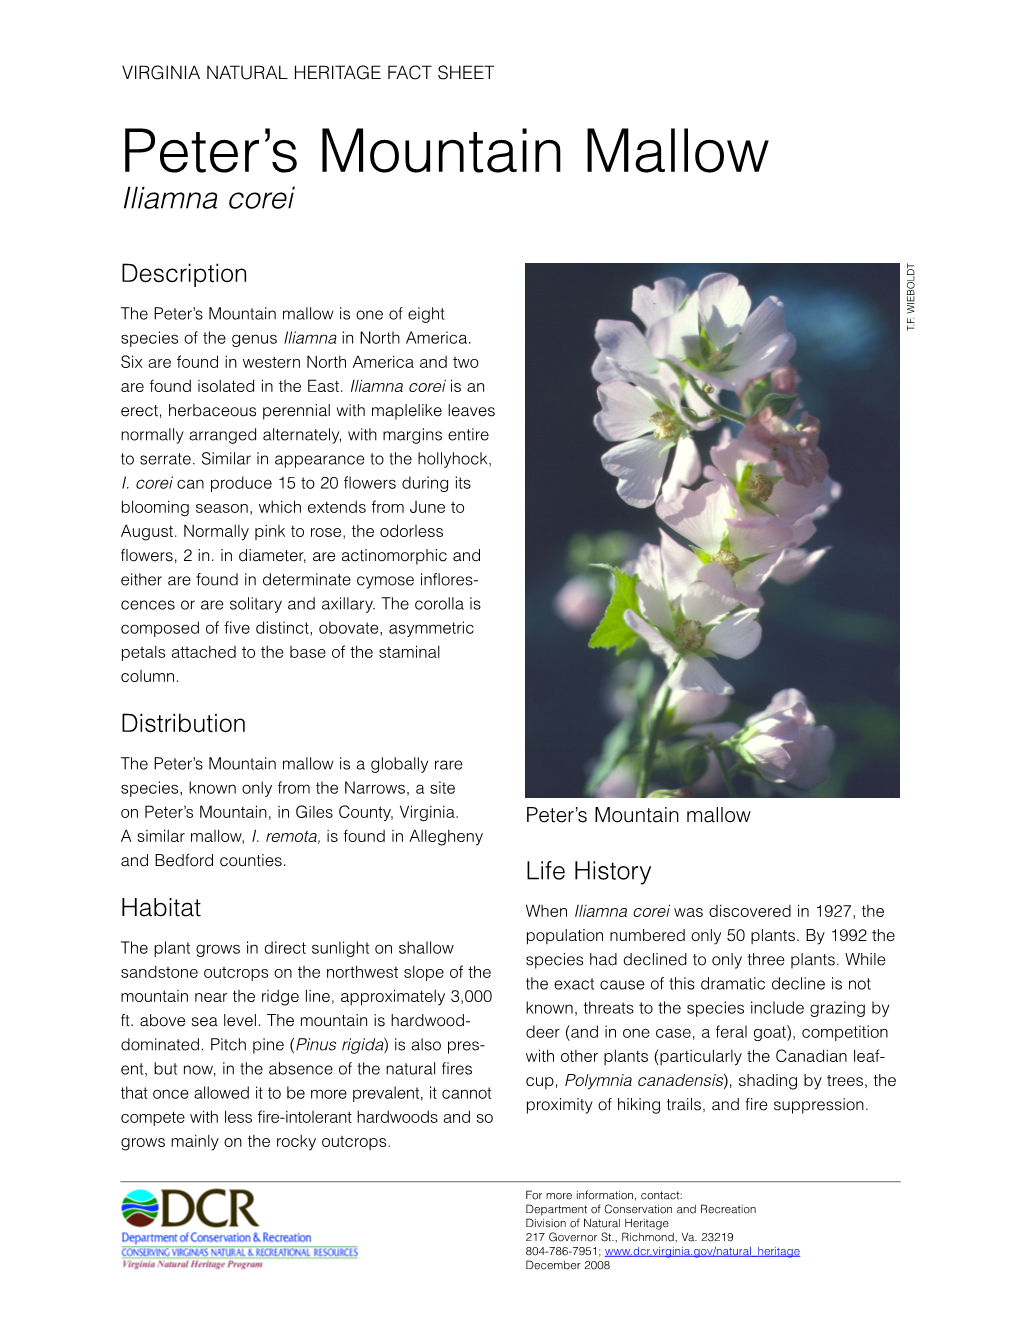 Peter's Mountain Mallow